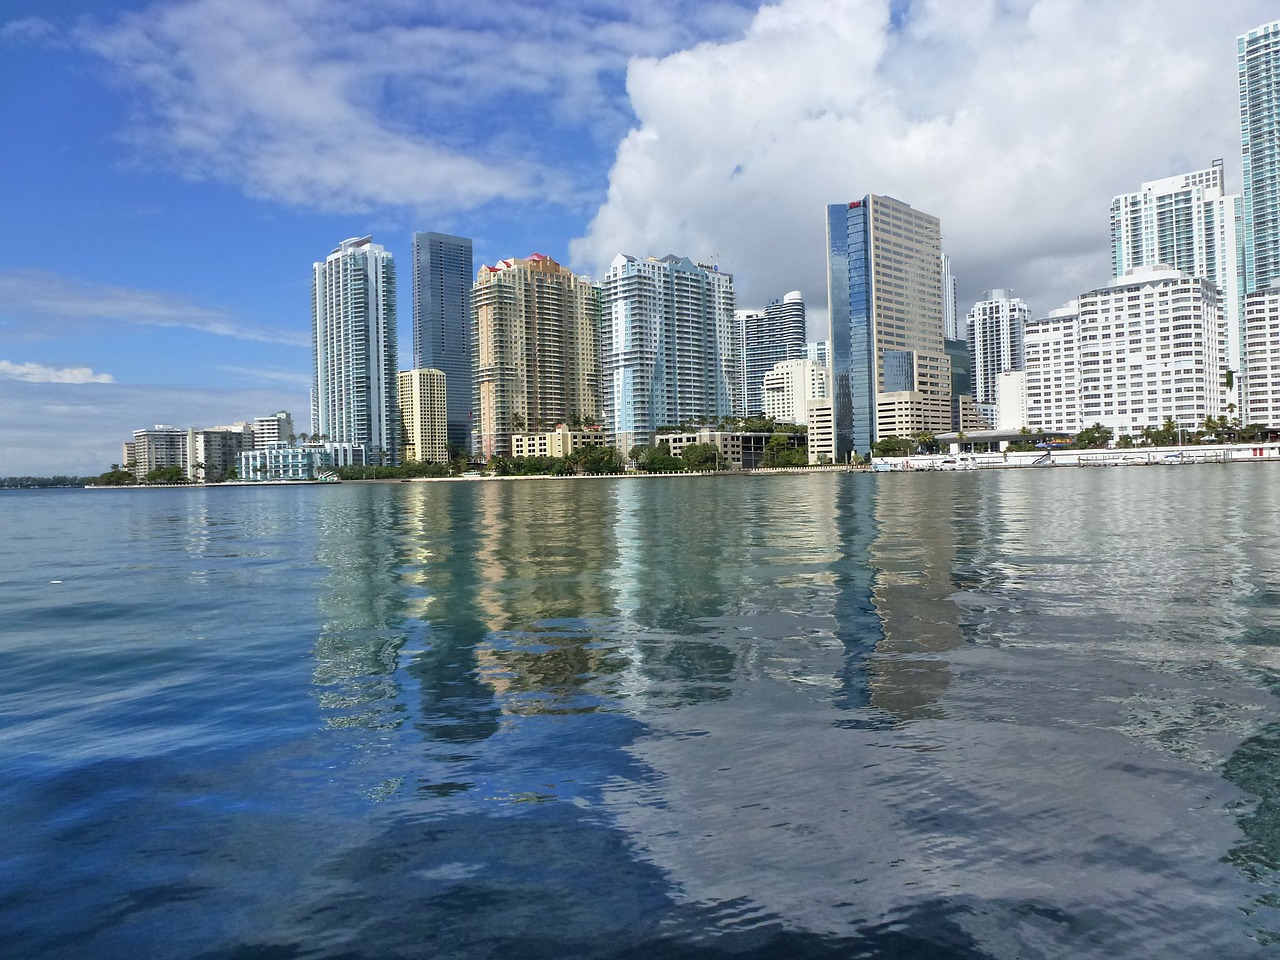 Miami skyline of waterfront condos.